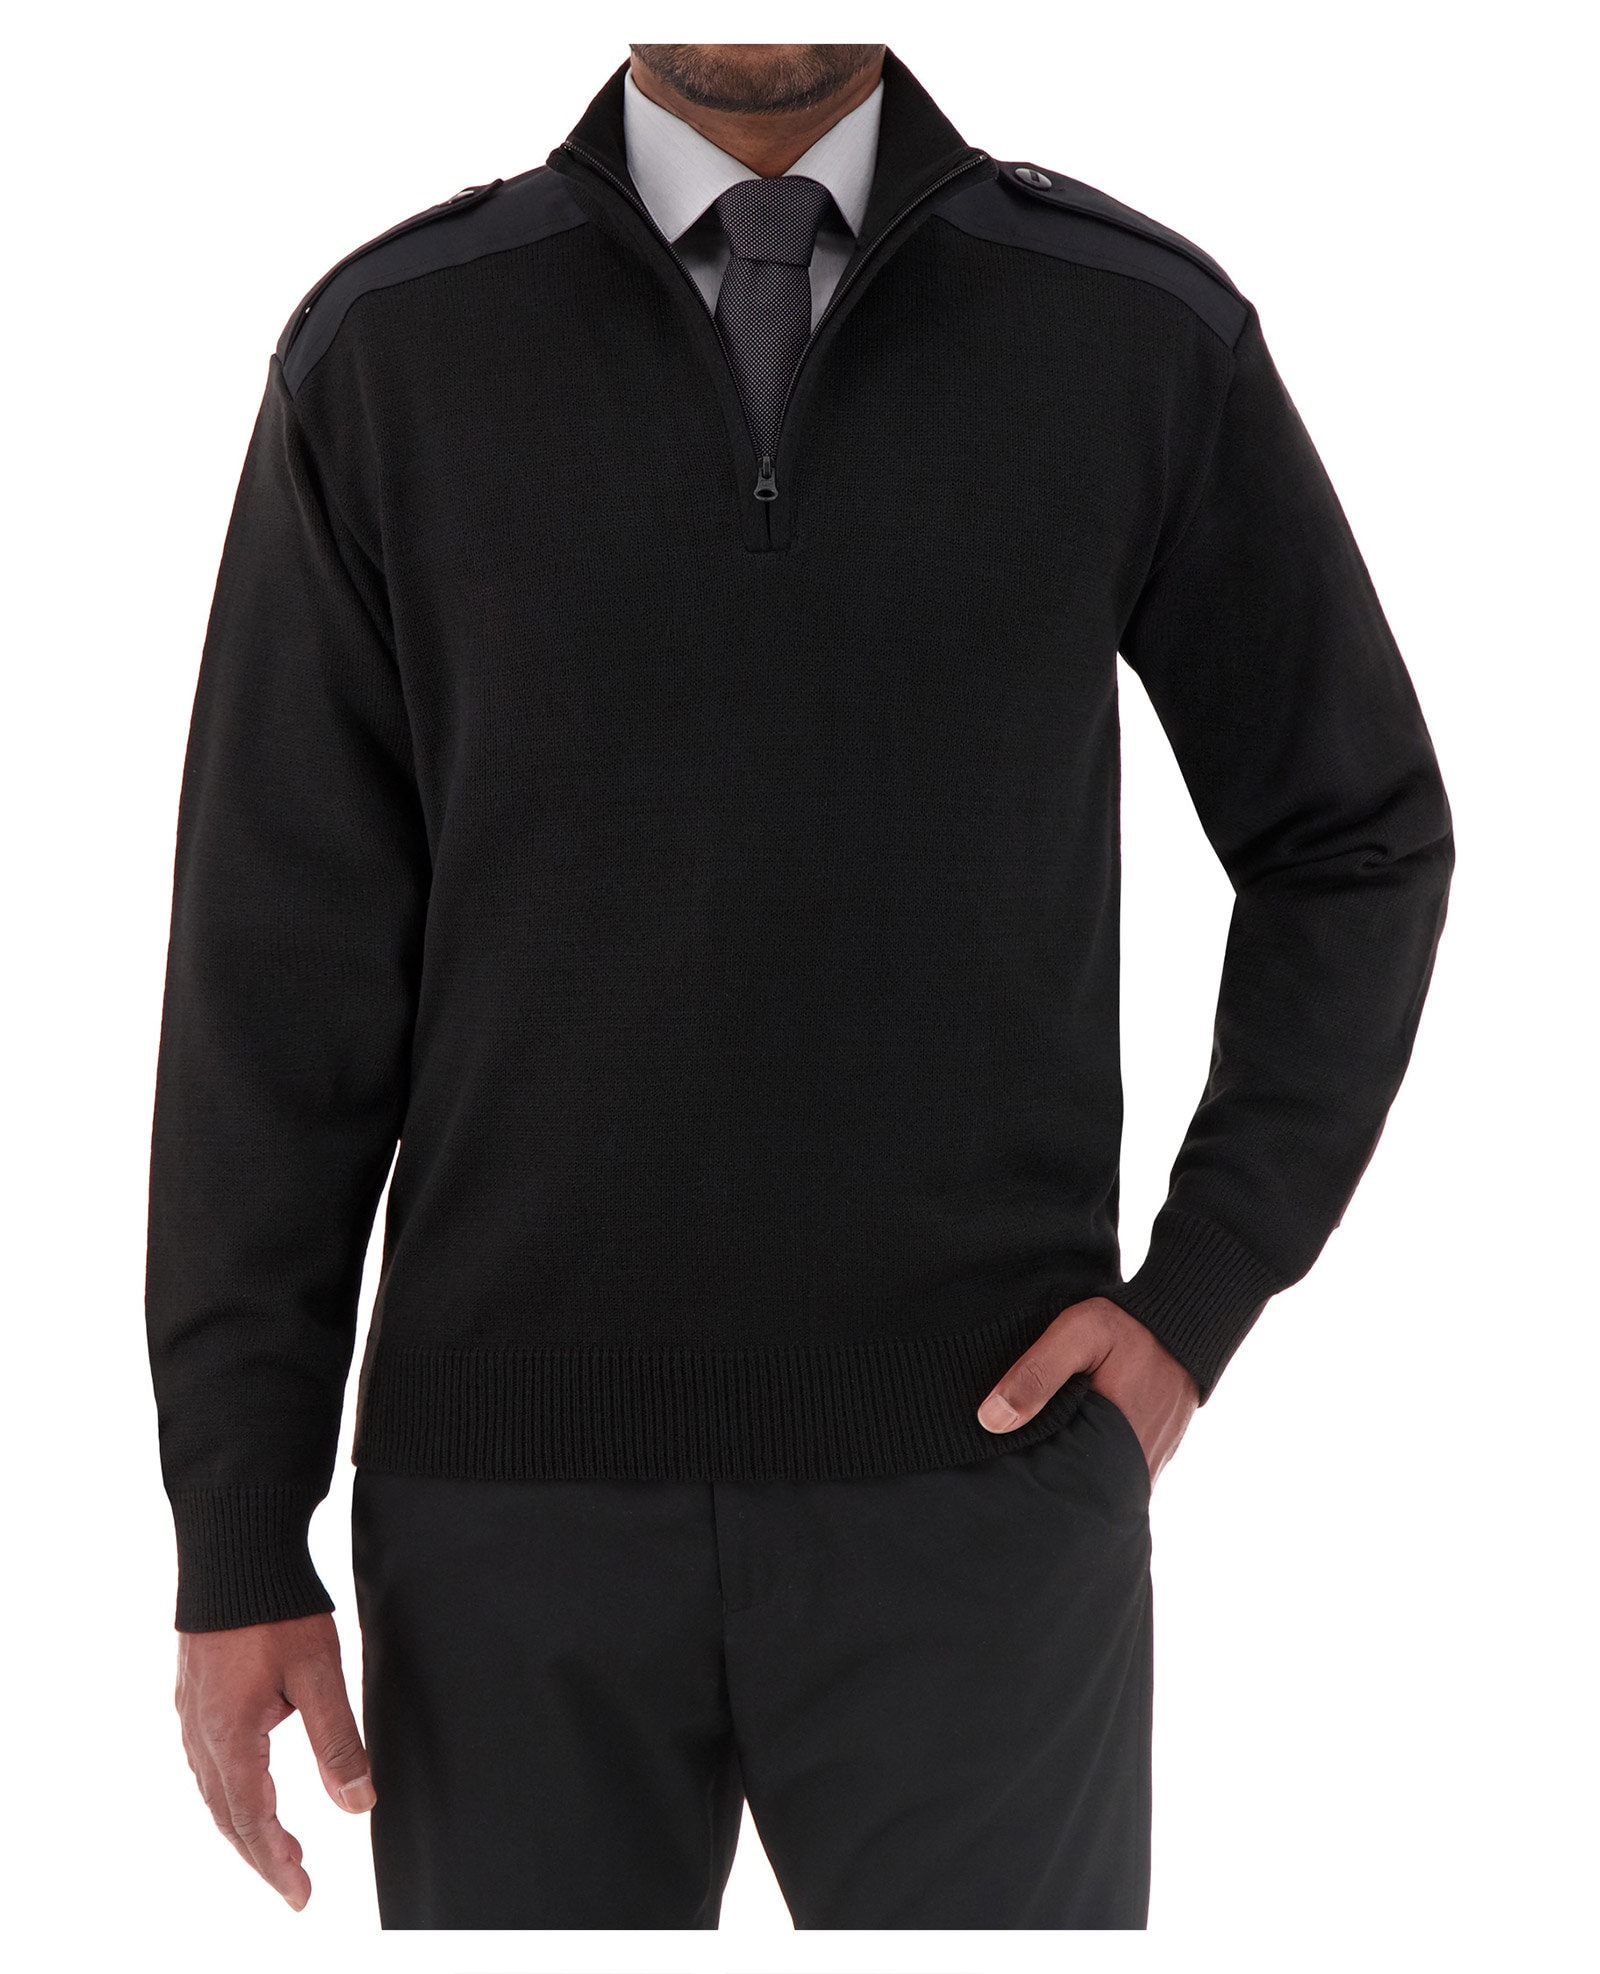 black quarter zip mock neck sweater with shoulder patches 